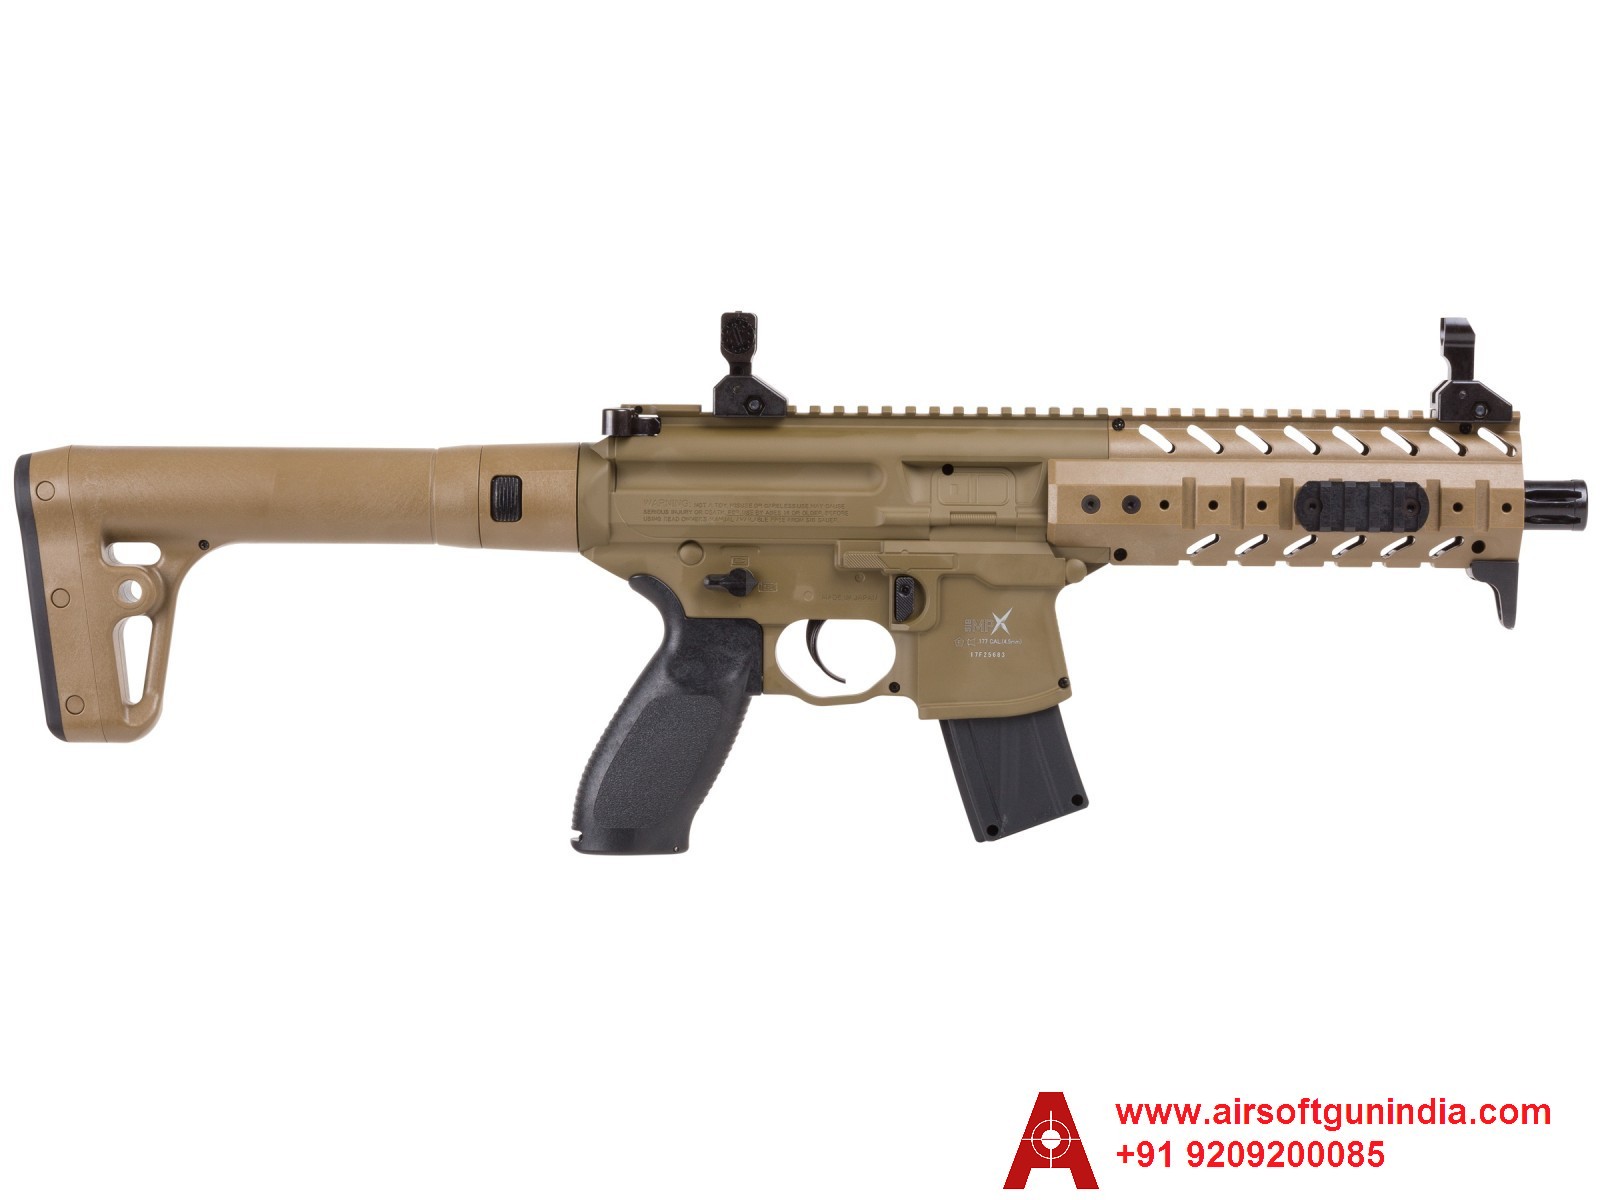 SIG Sauer MPX CO2 Pellet Rifle, Flat Dark Earth By Airsoft Gun India